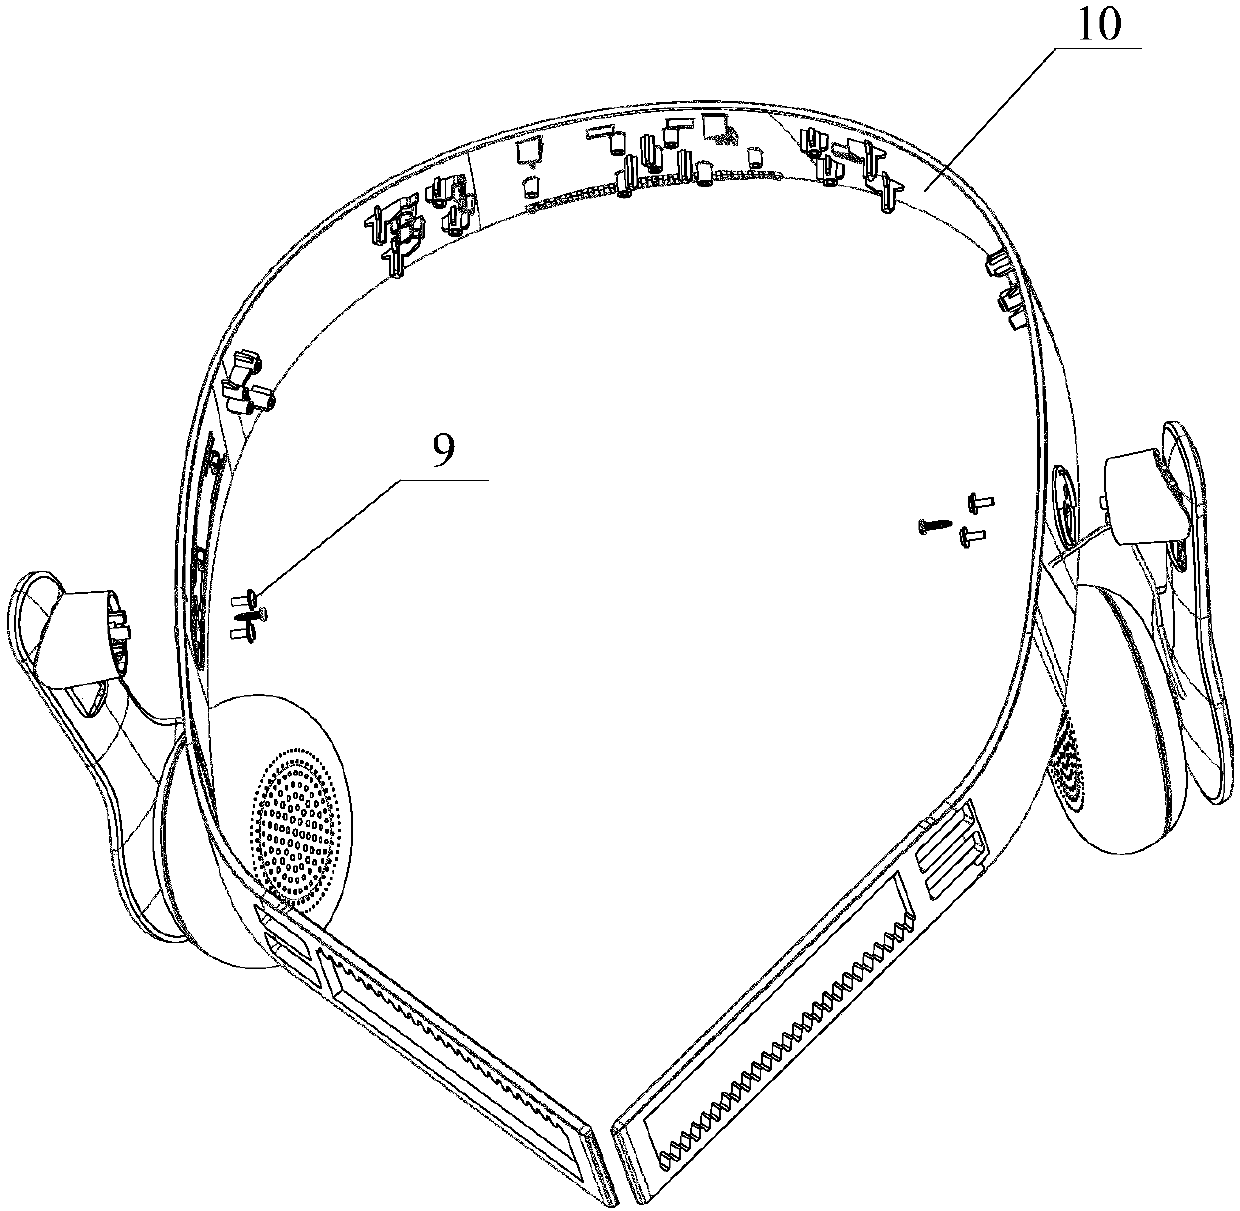 Virtual reality head-mounted device